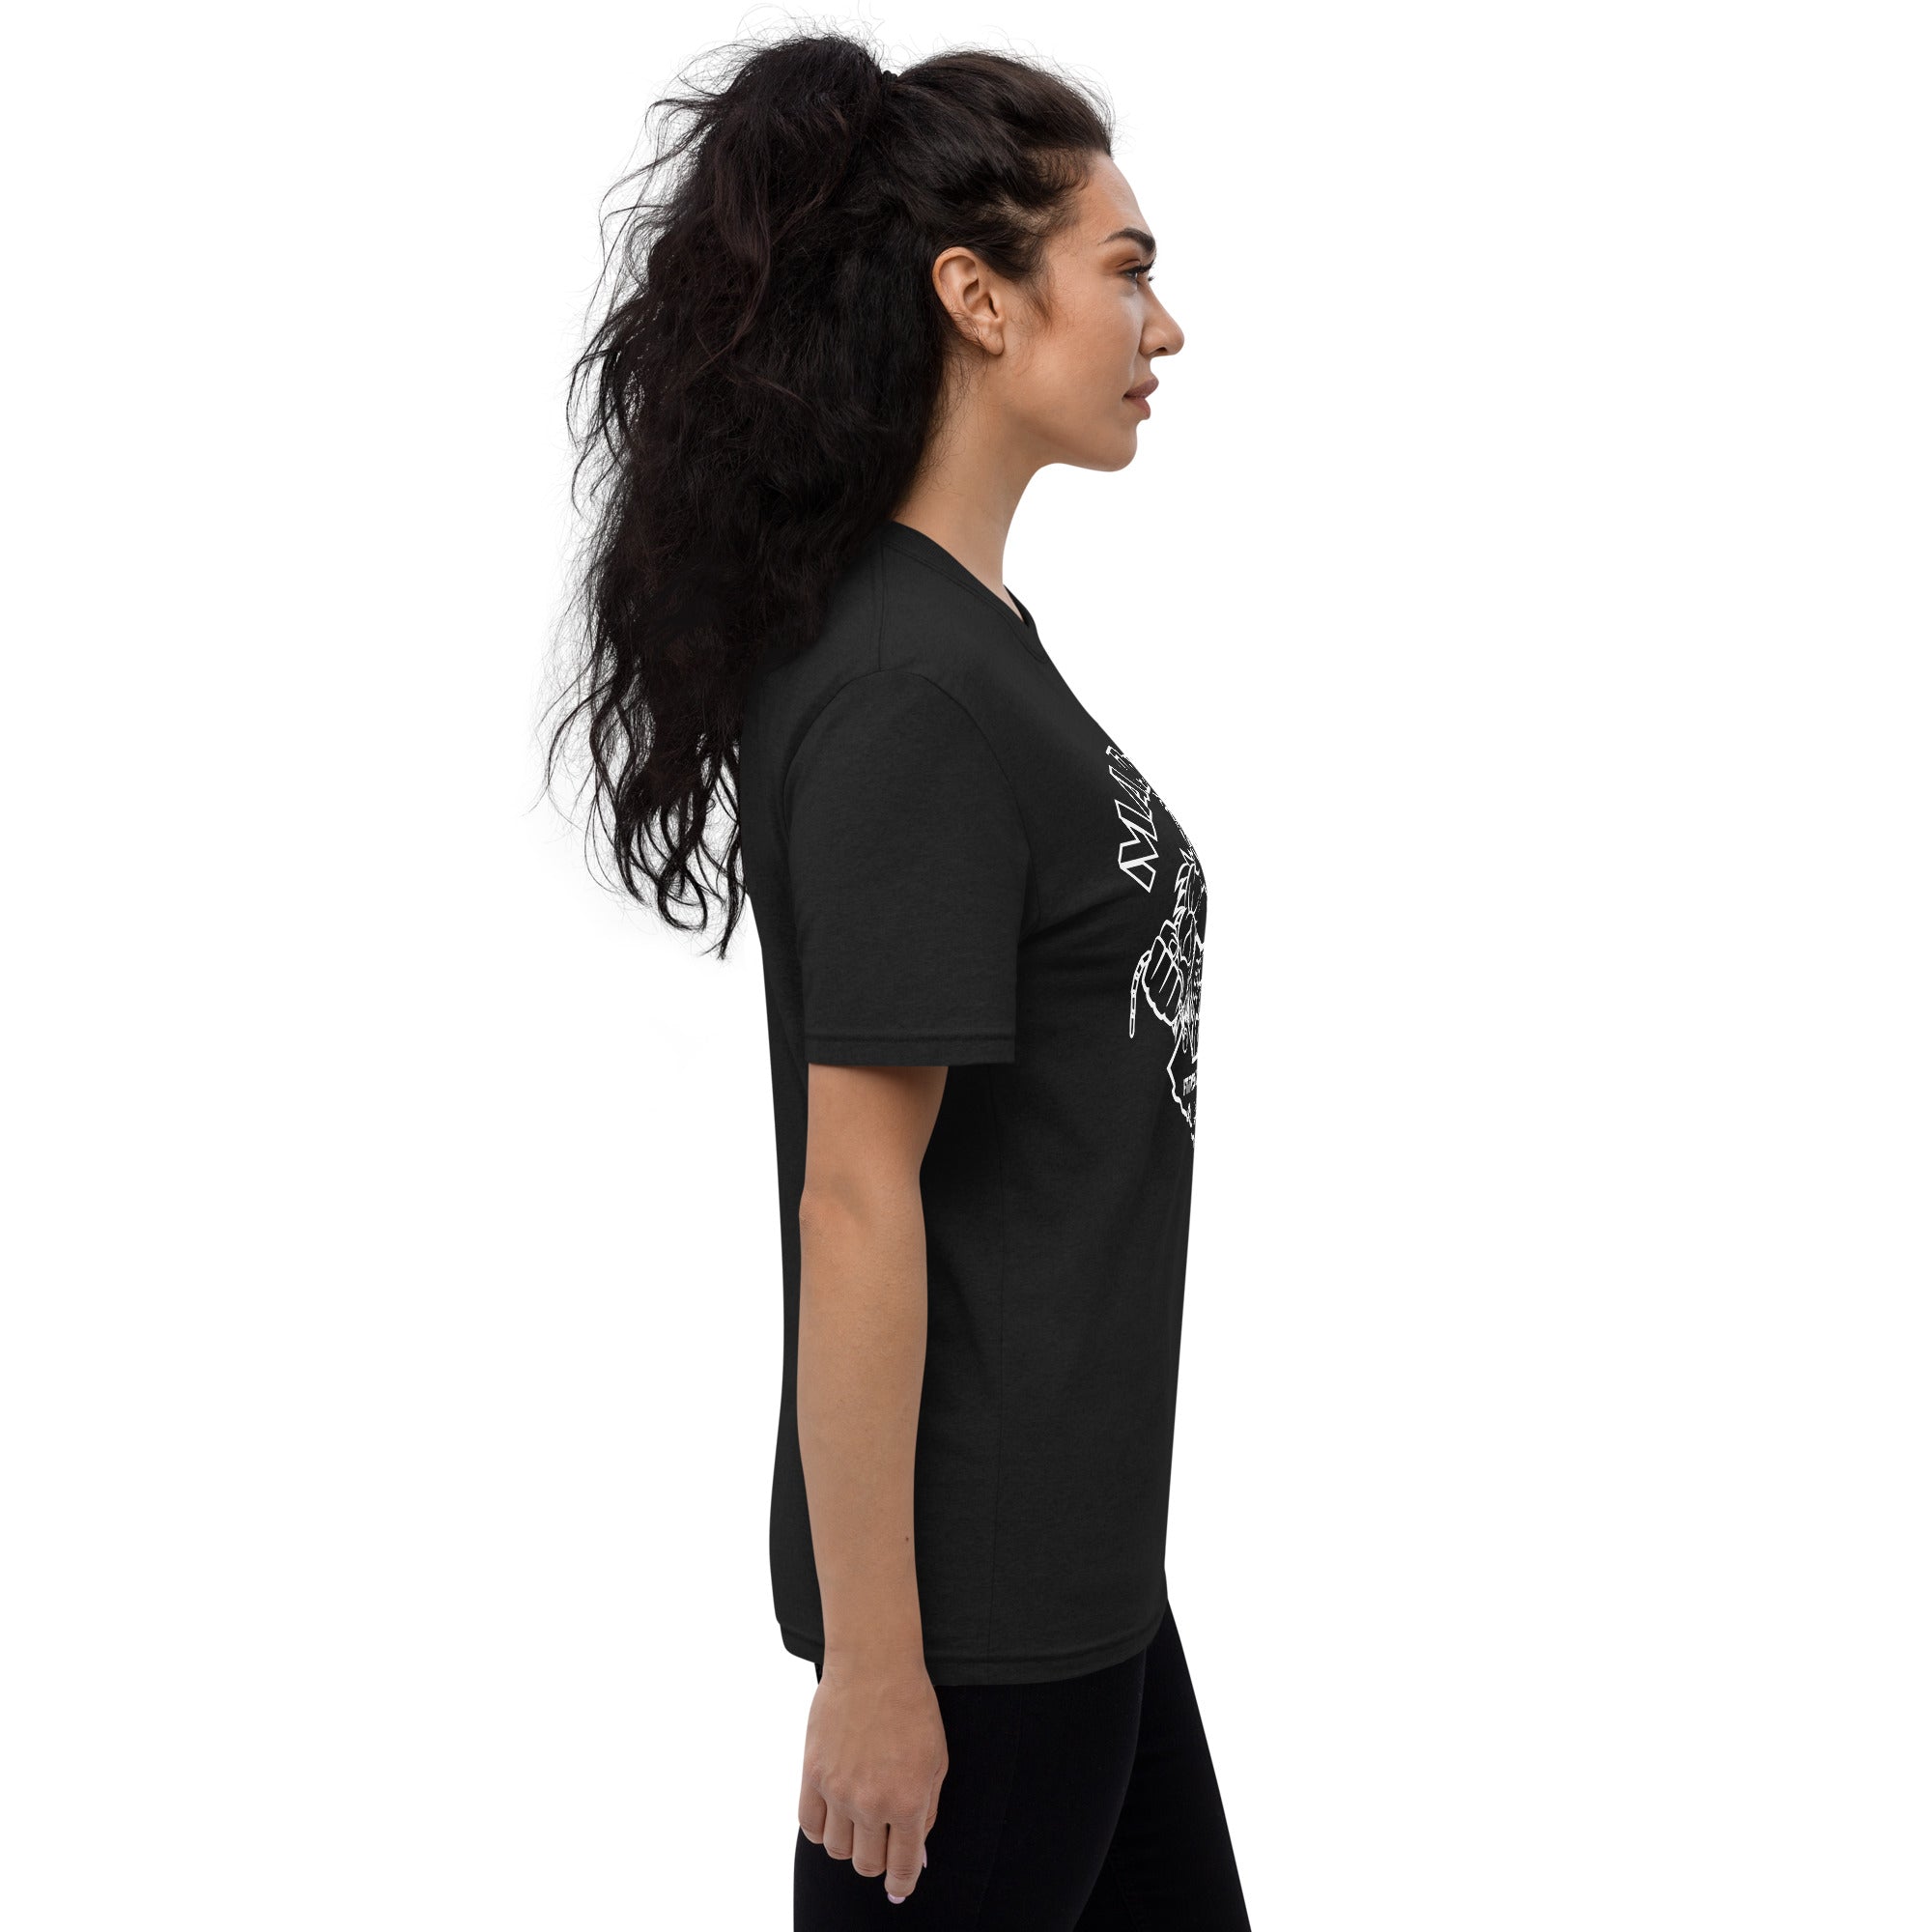 Unisex recycled t-shirt Custom Printed  - Adult T-Shirt | Size: S M L XL 2XL